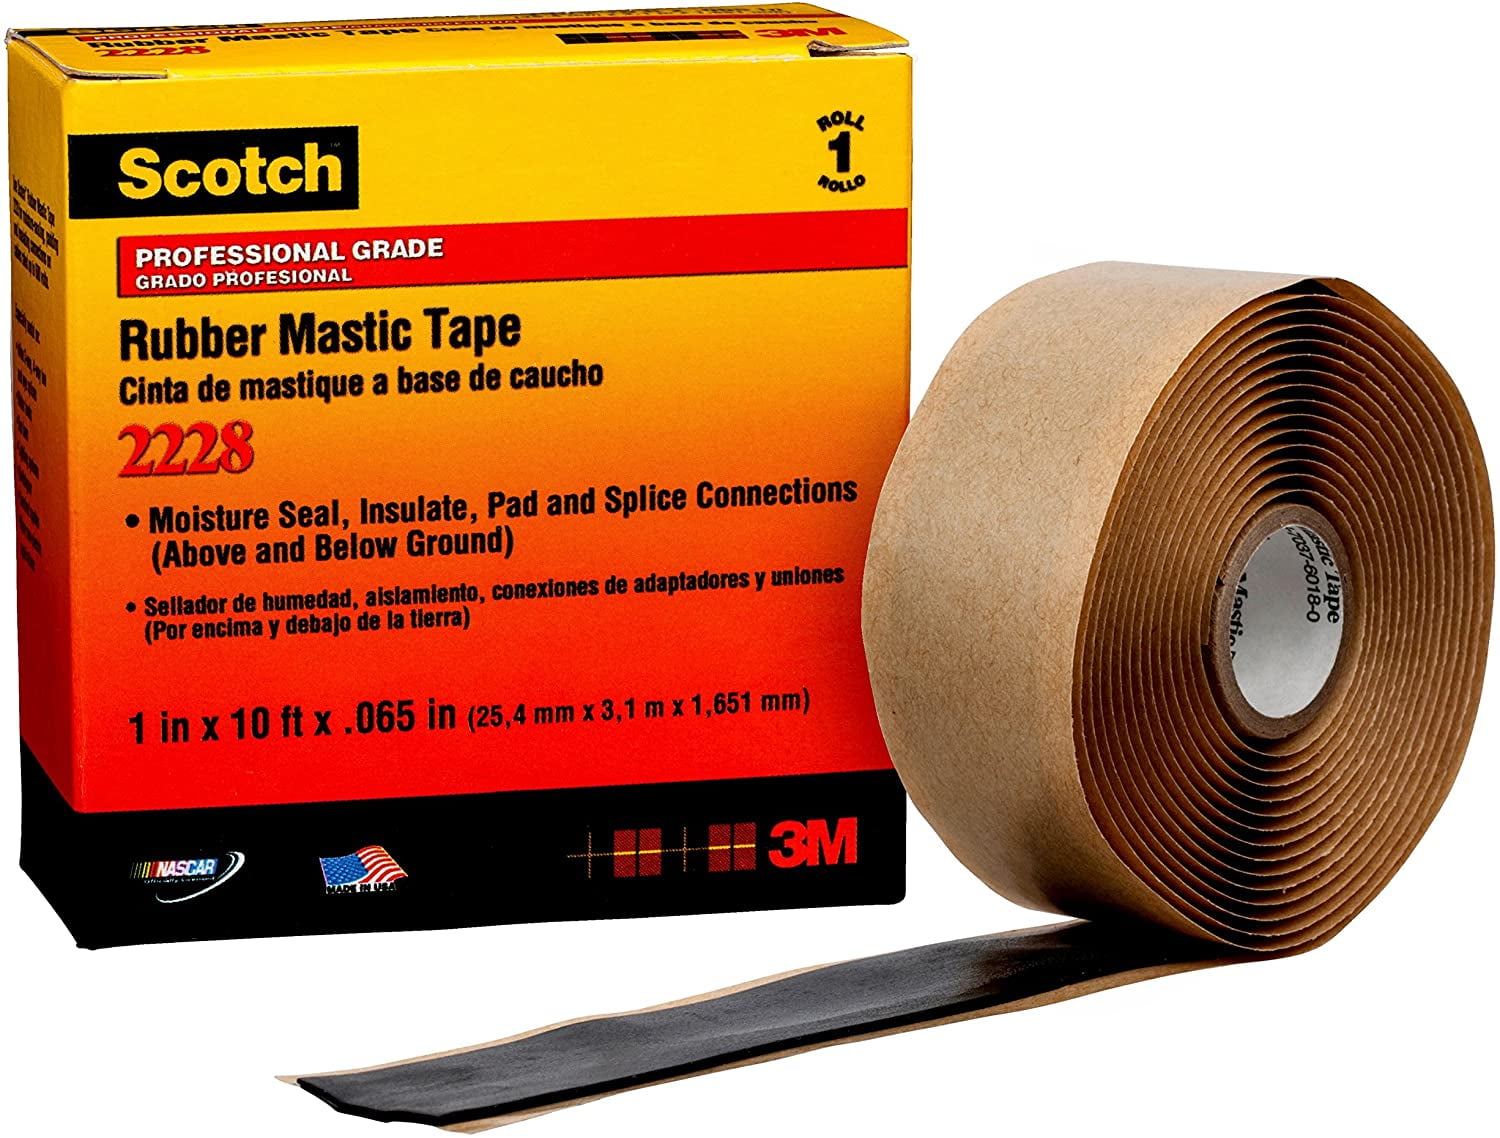 1 in x 10 ft x 0.65 in 3M 2228 Scotch Moisture Sealing Electrical Tape 